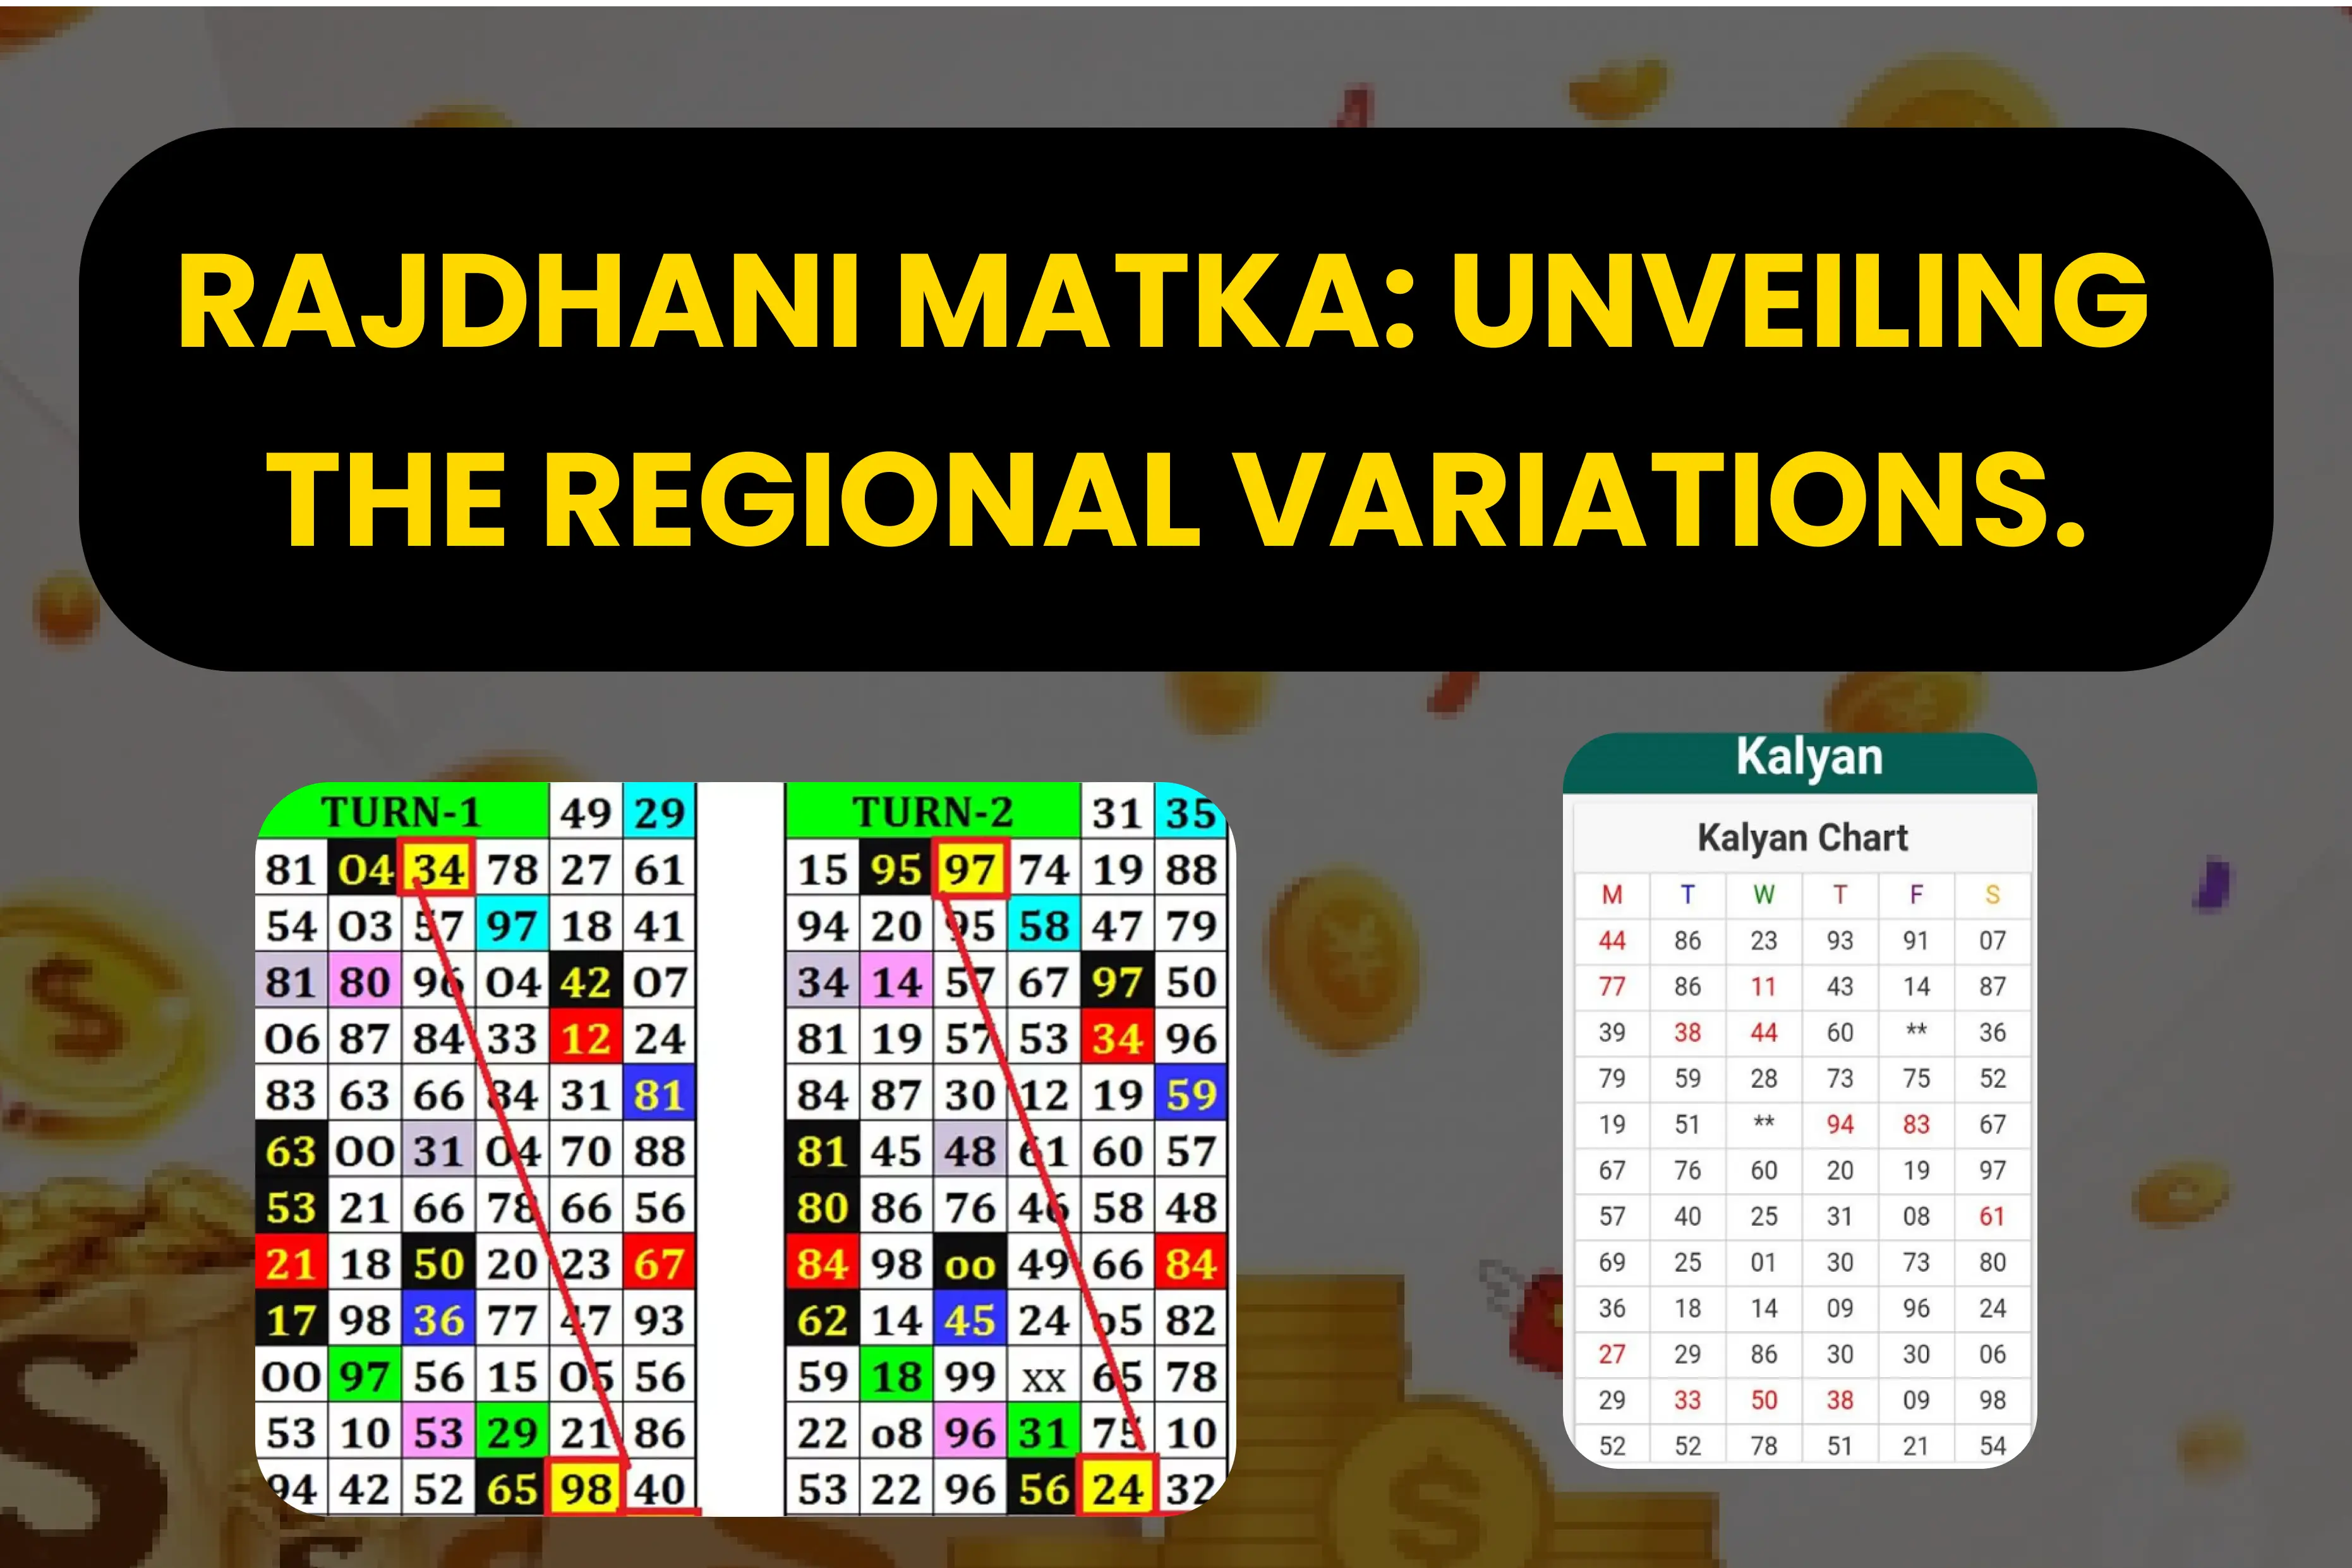 Rajdhani Matka: Unveiling the Regional Variations